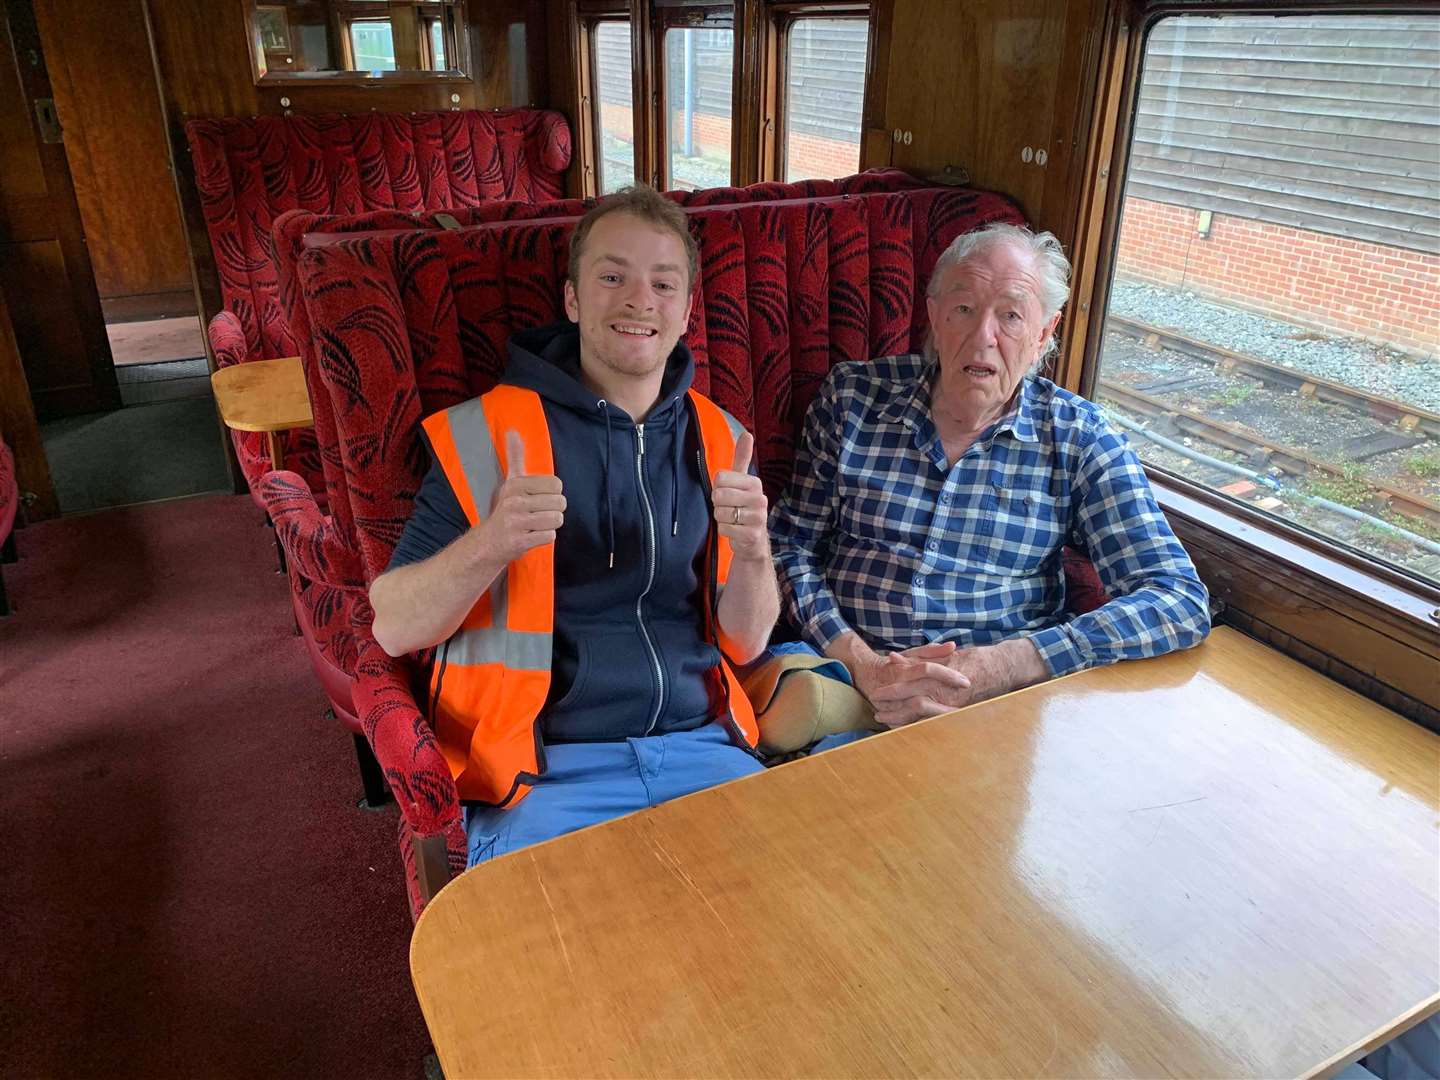 Michael Gambon enjoyed his train journey from Tenterden